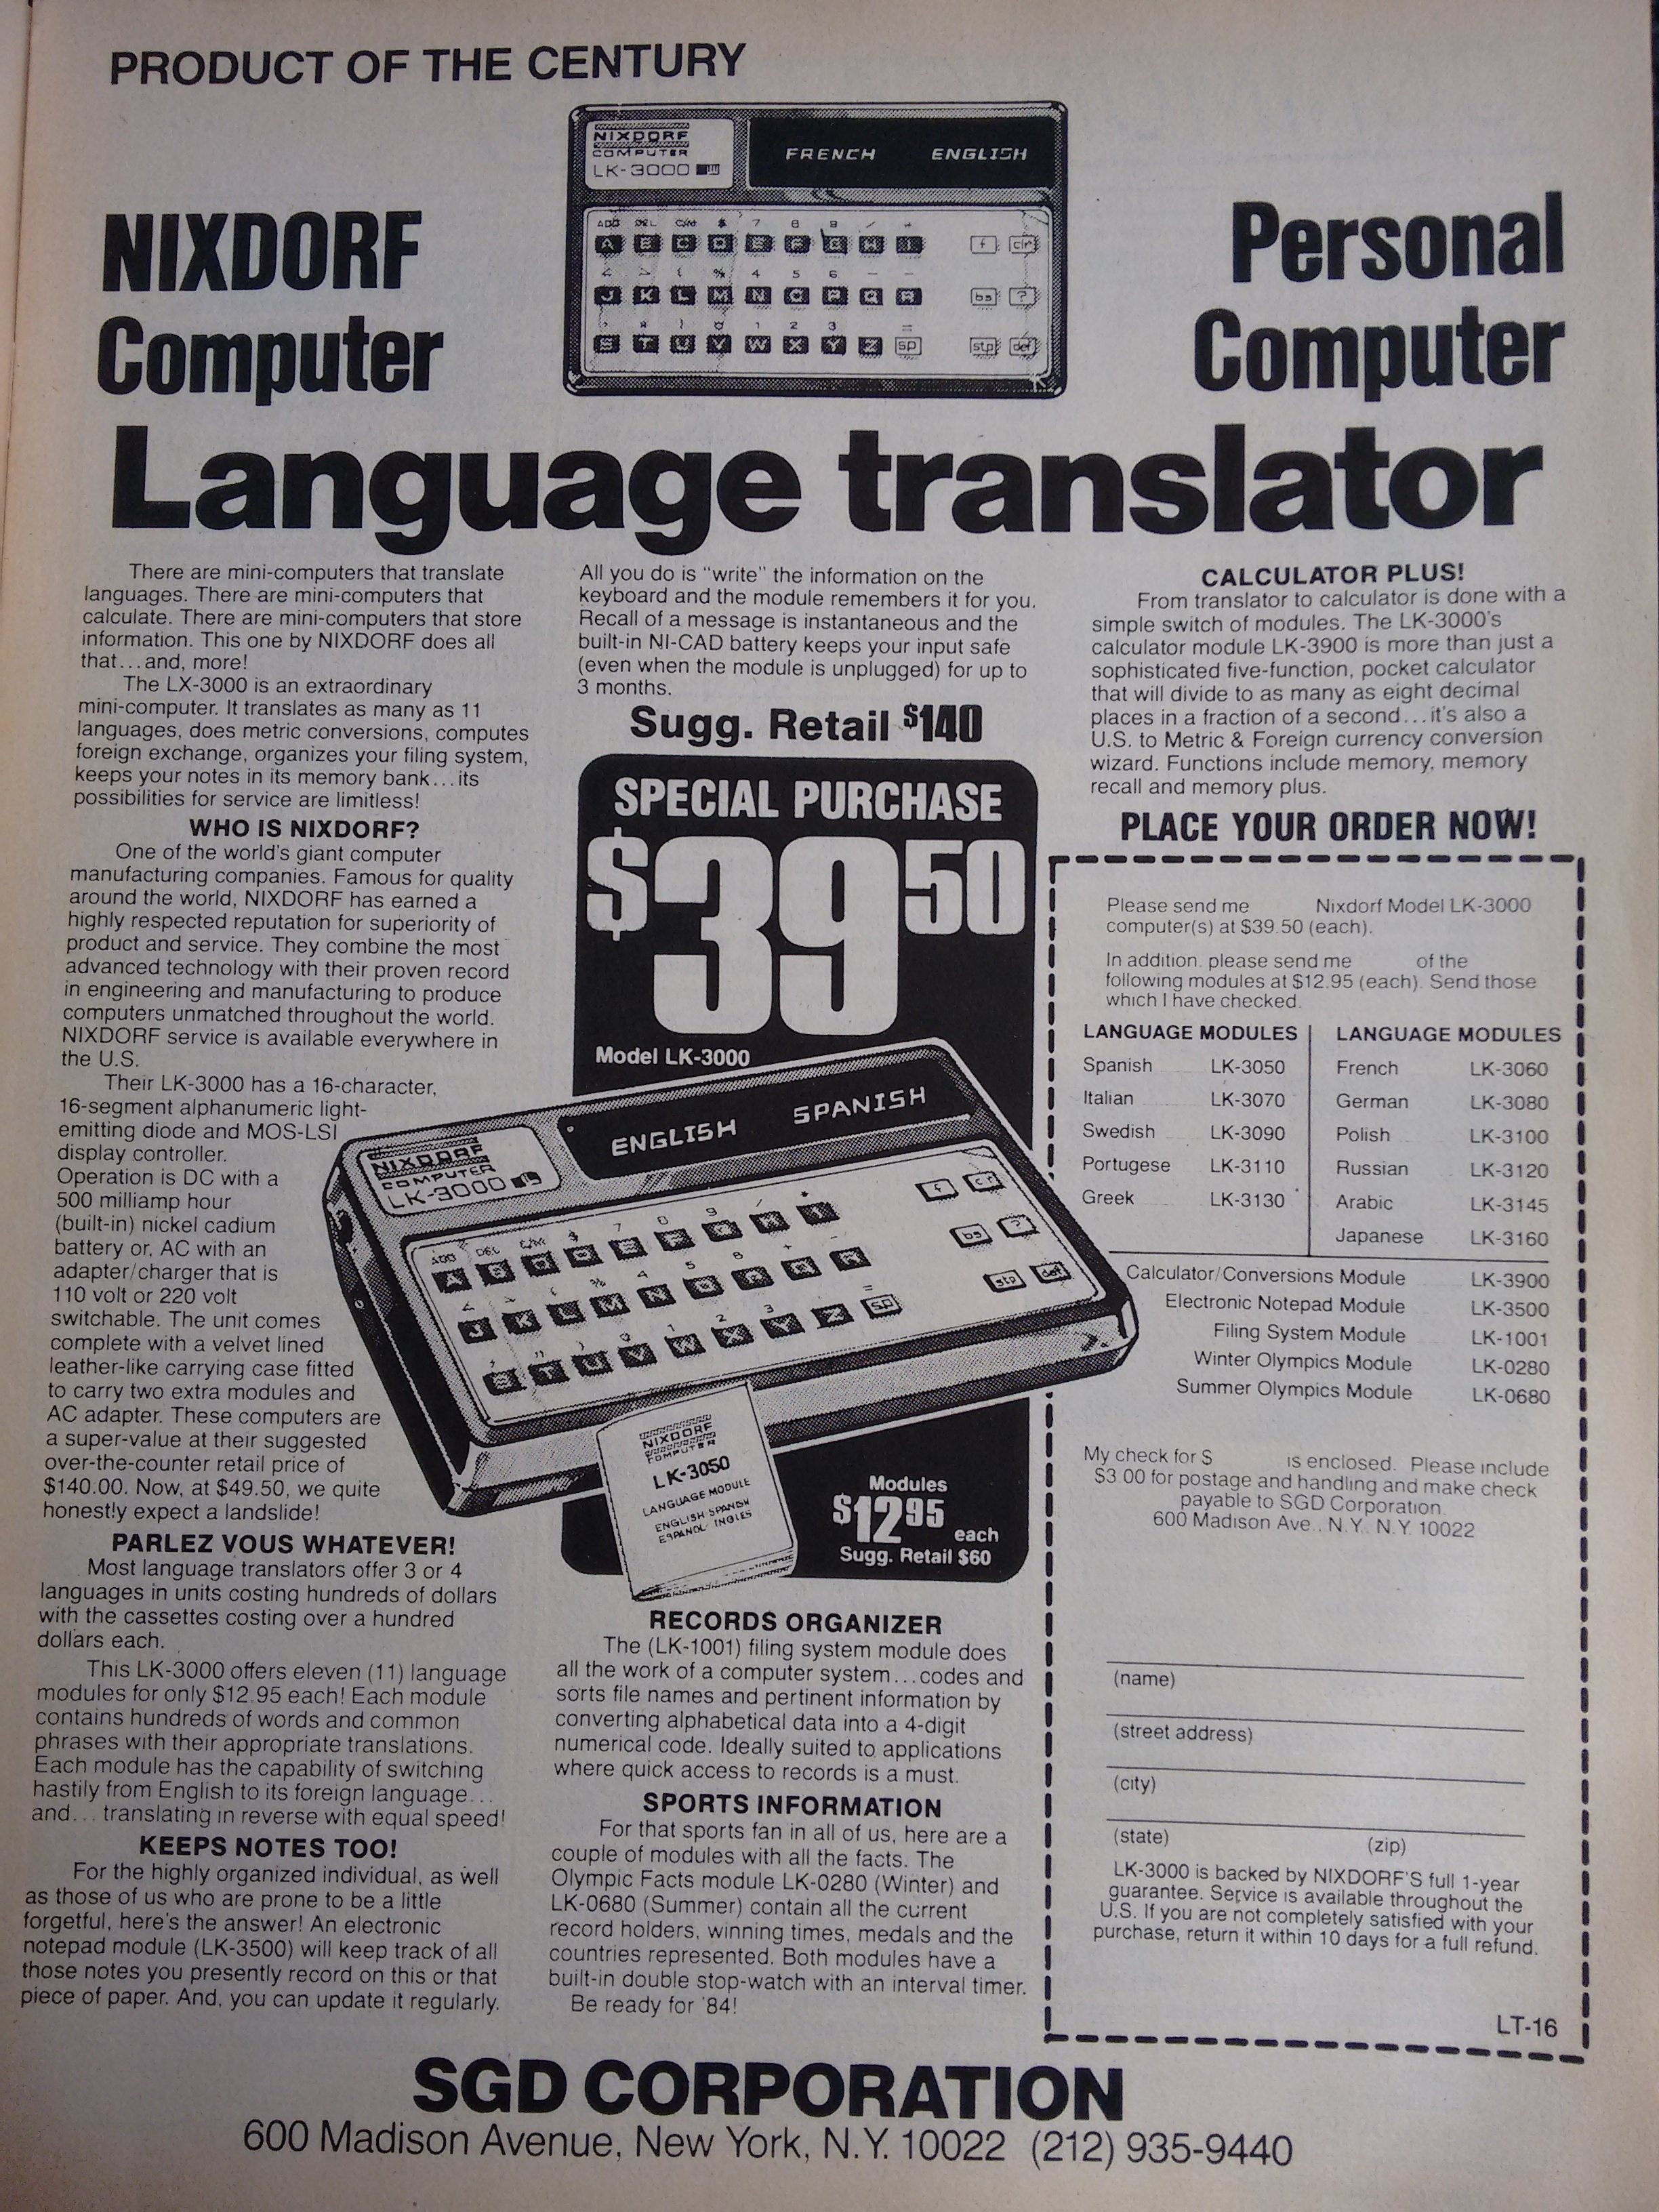 starlog-magazine-language-translator-advertisement-1980s